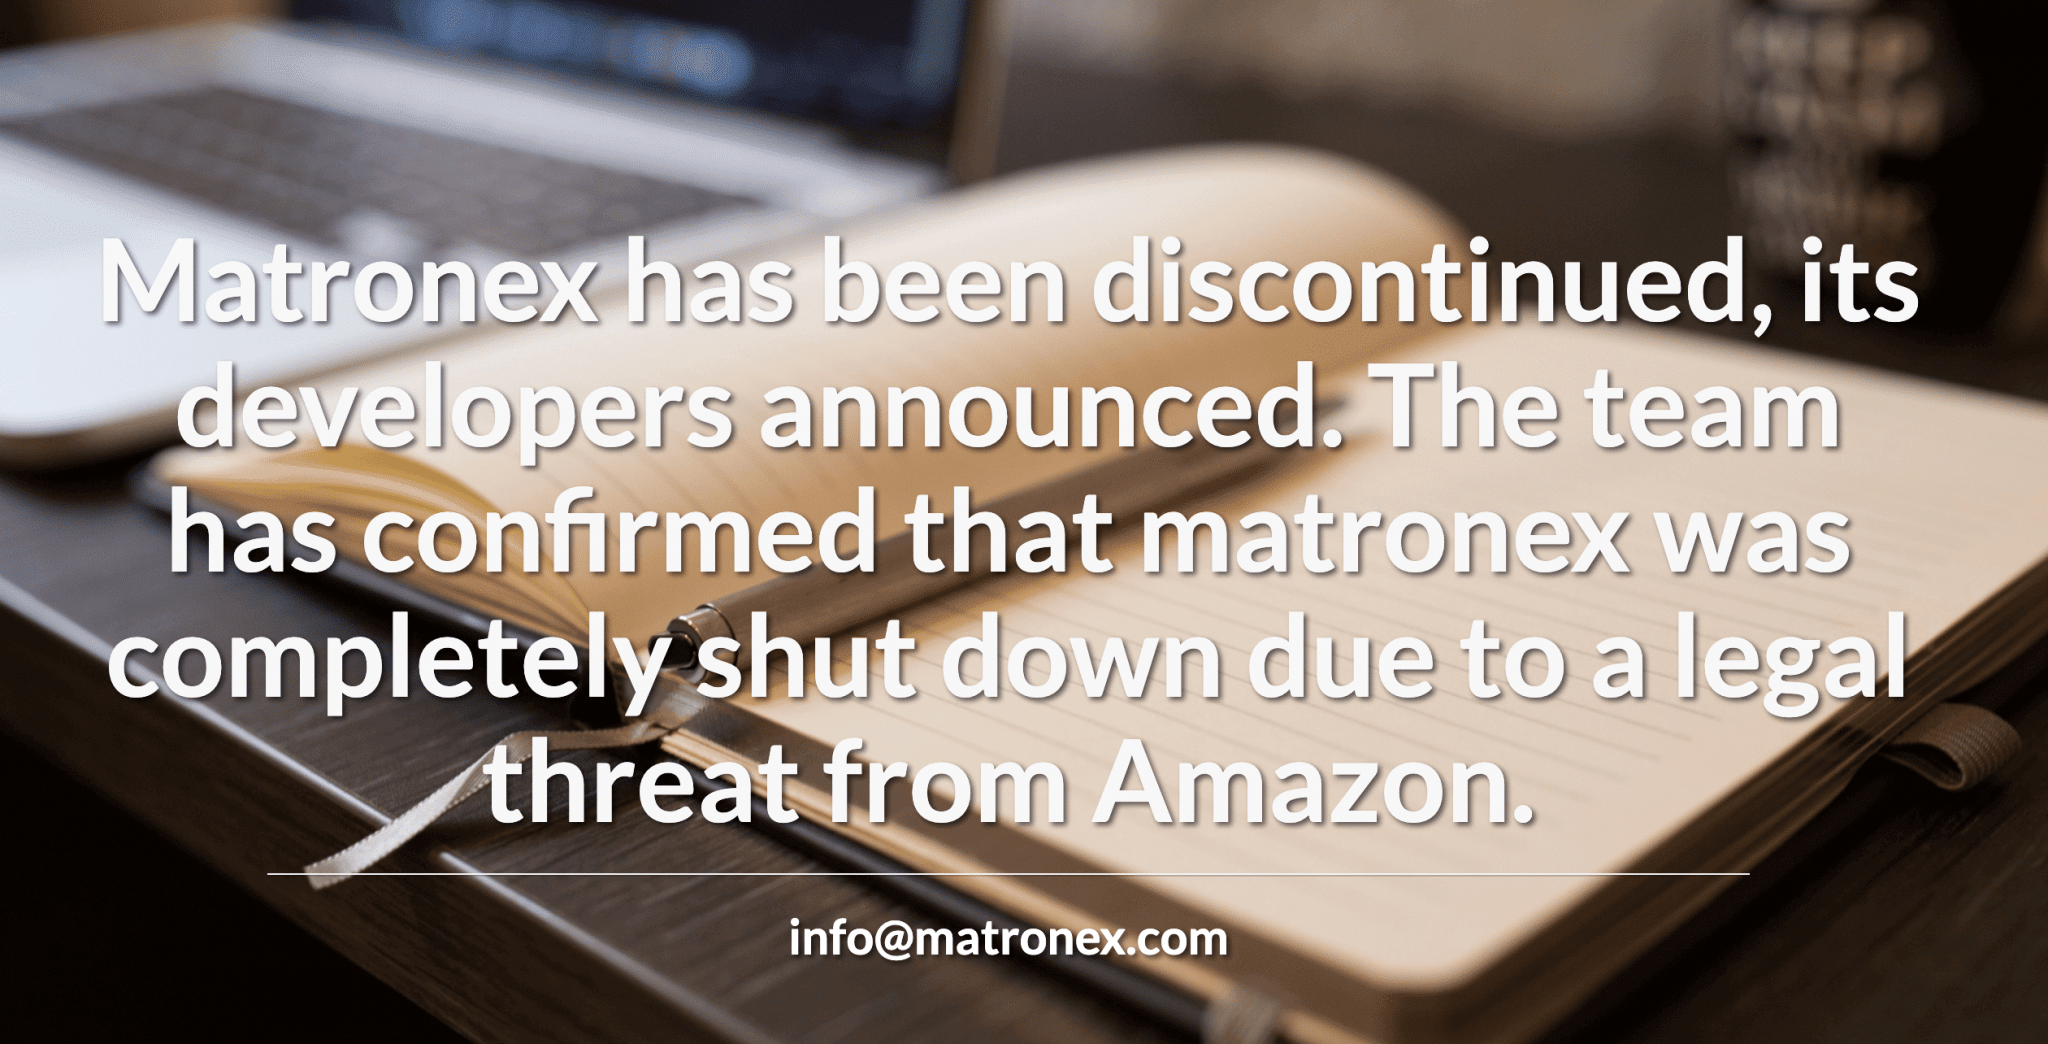 Amazon shuts down Martonex